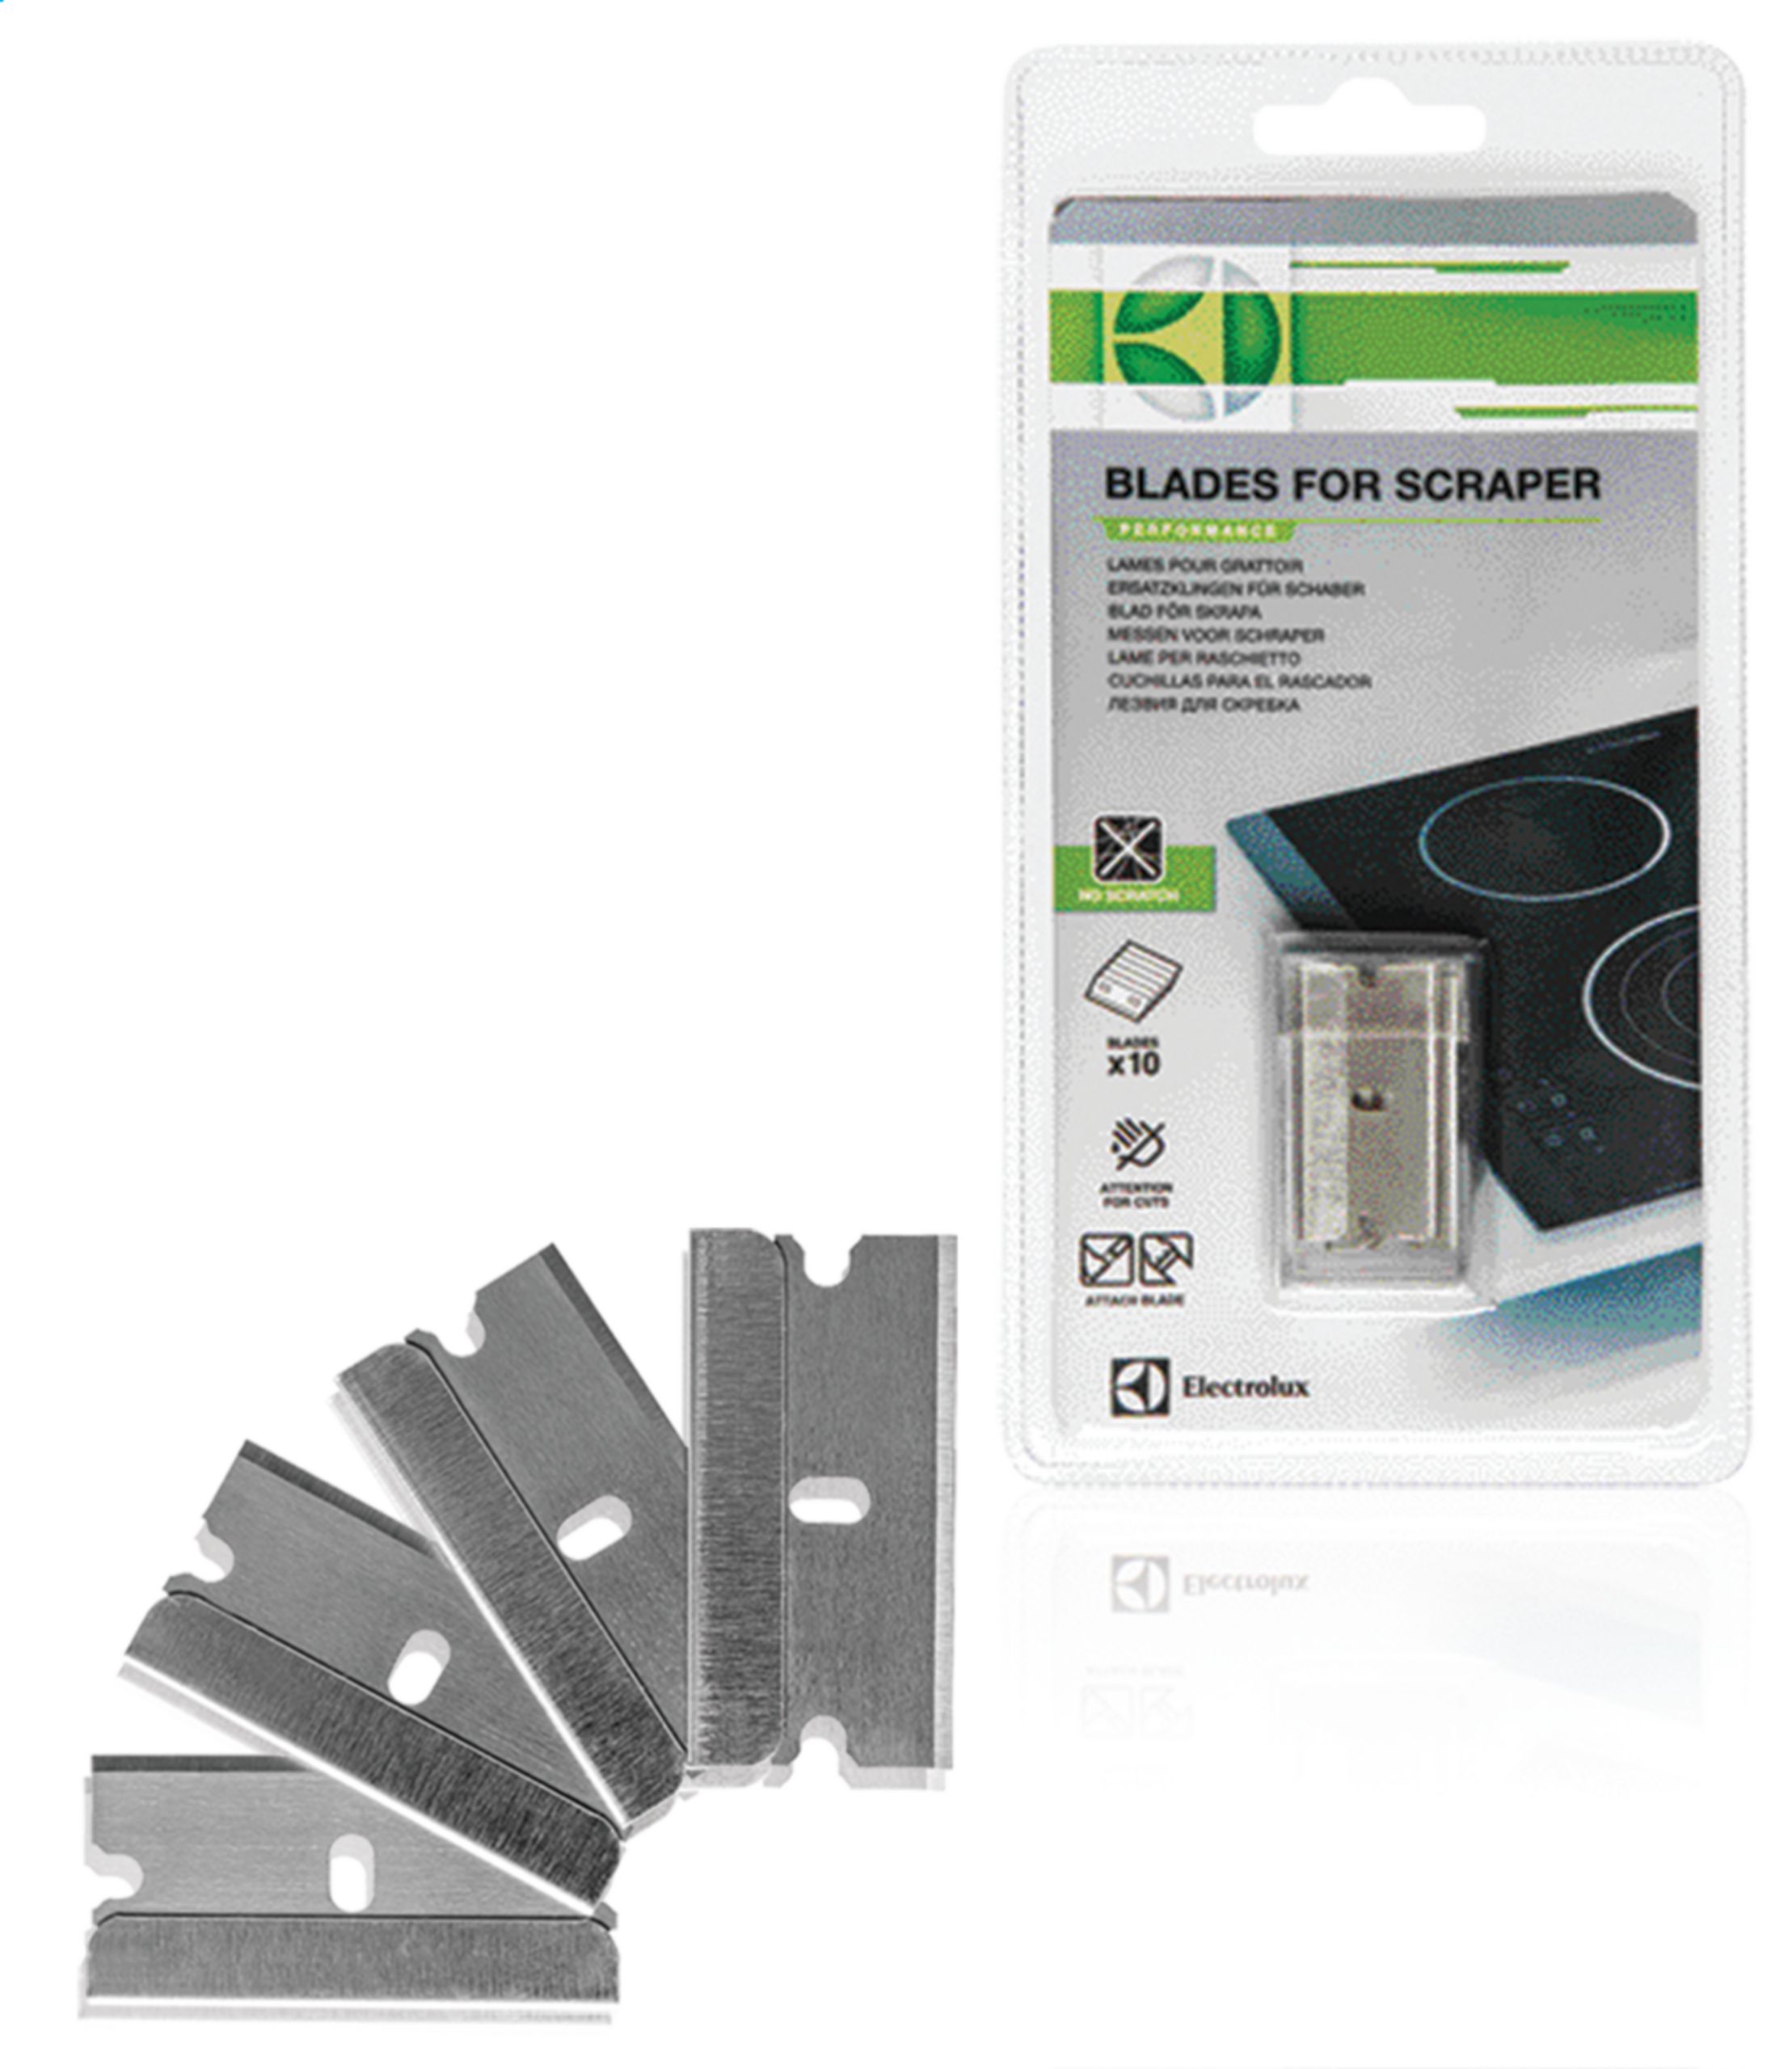 Spare blades ELECTROLUX for scraper 10pcs